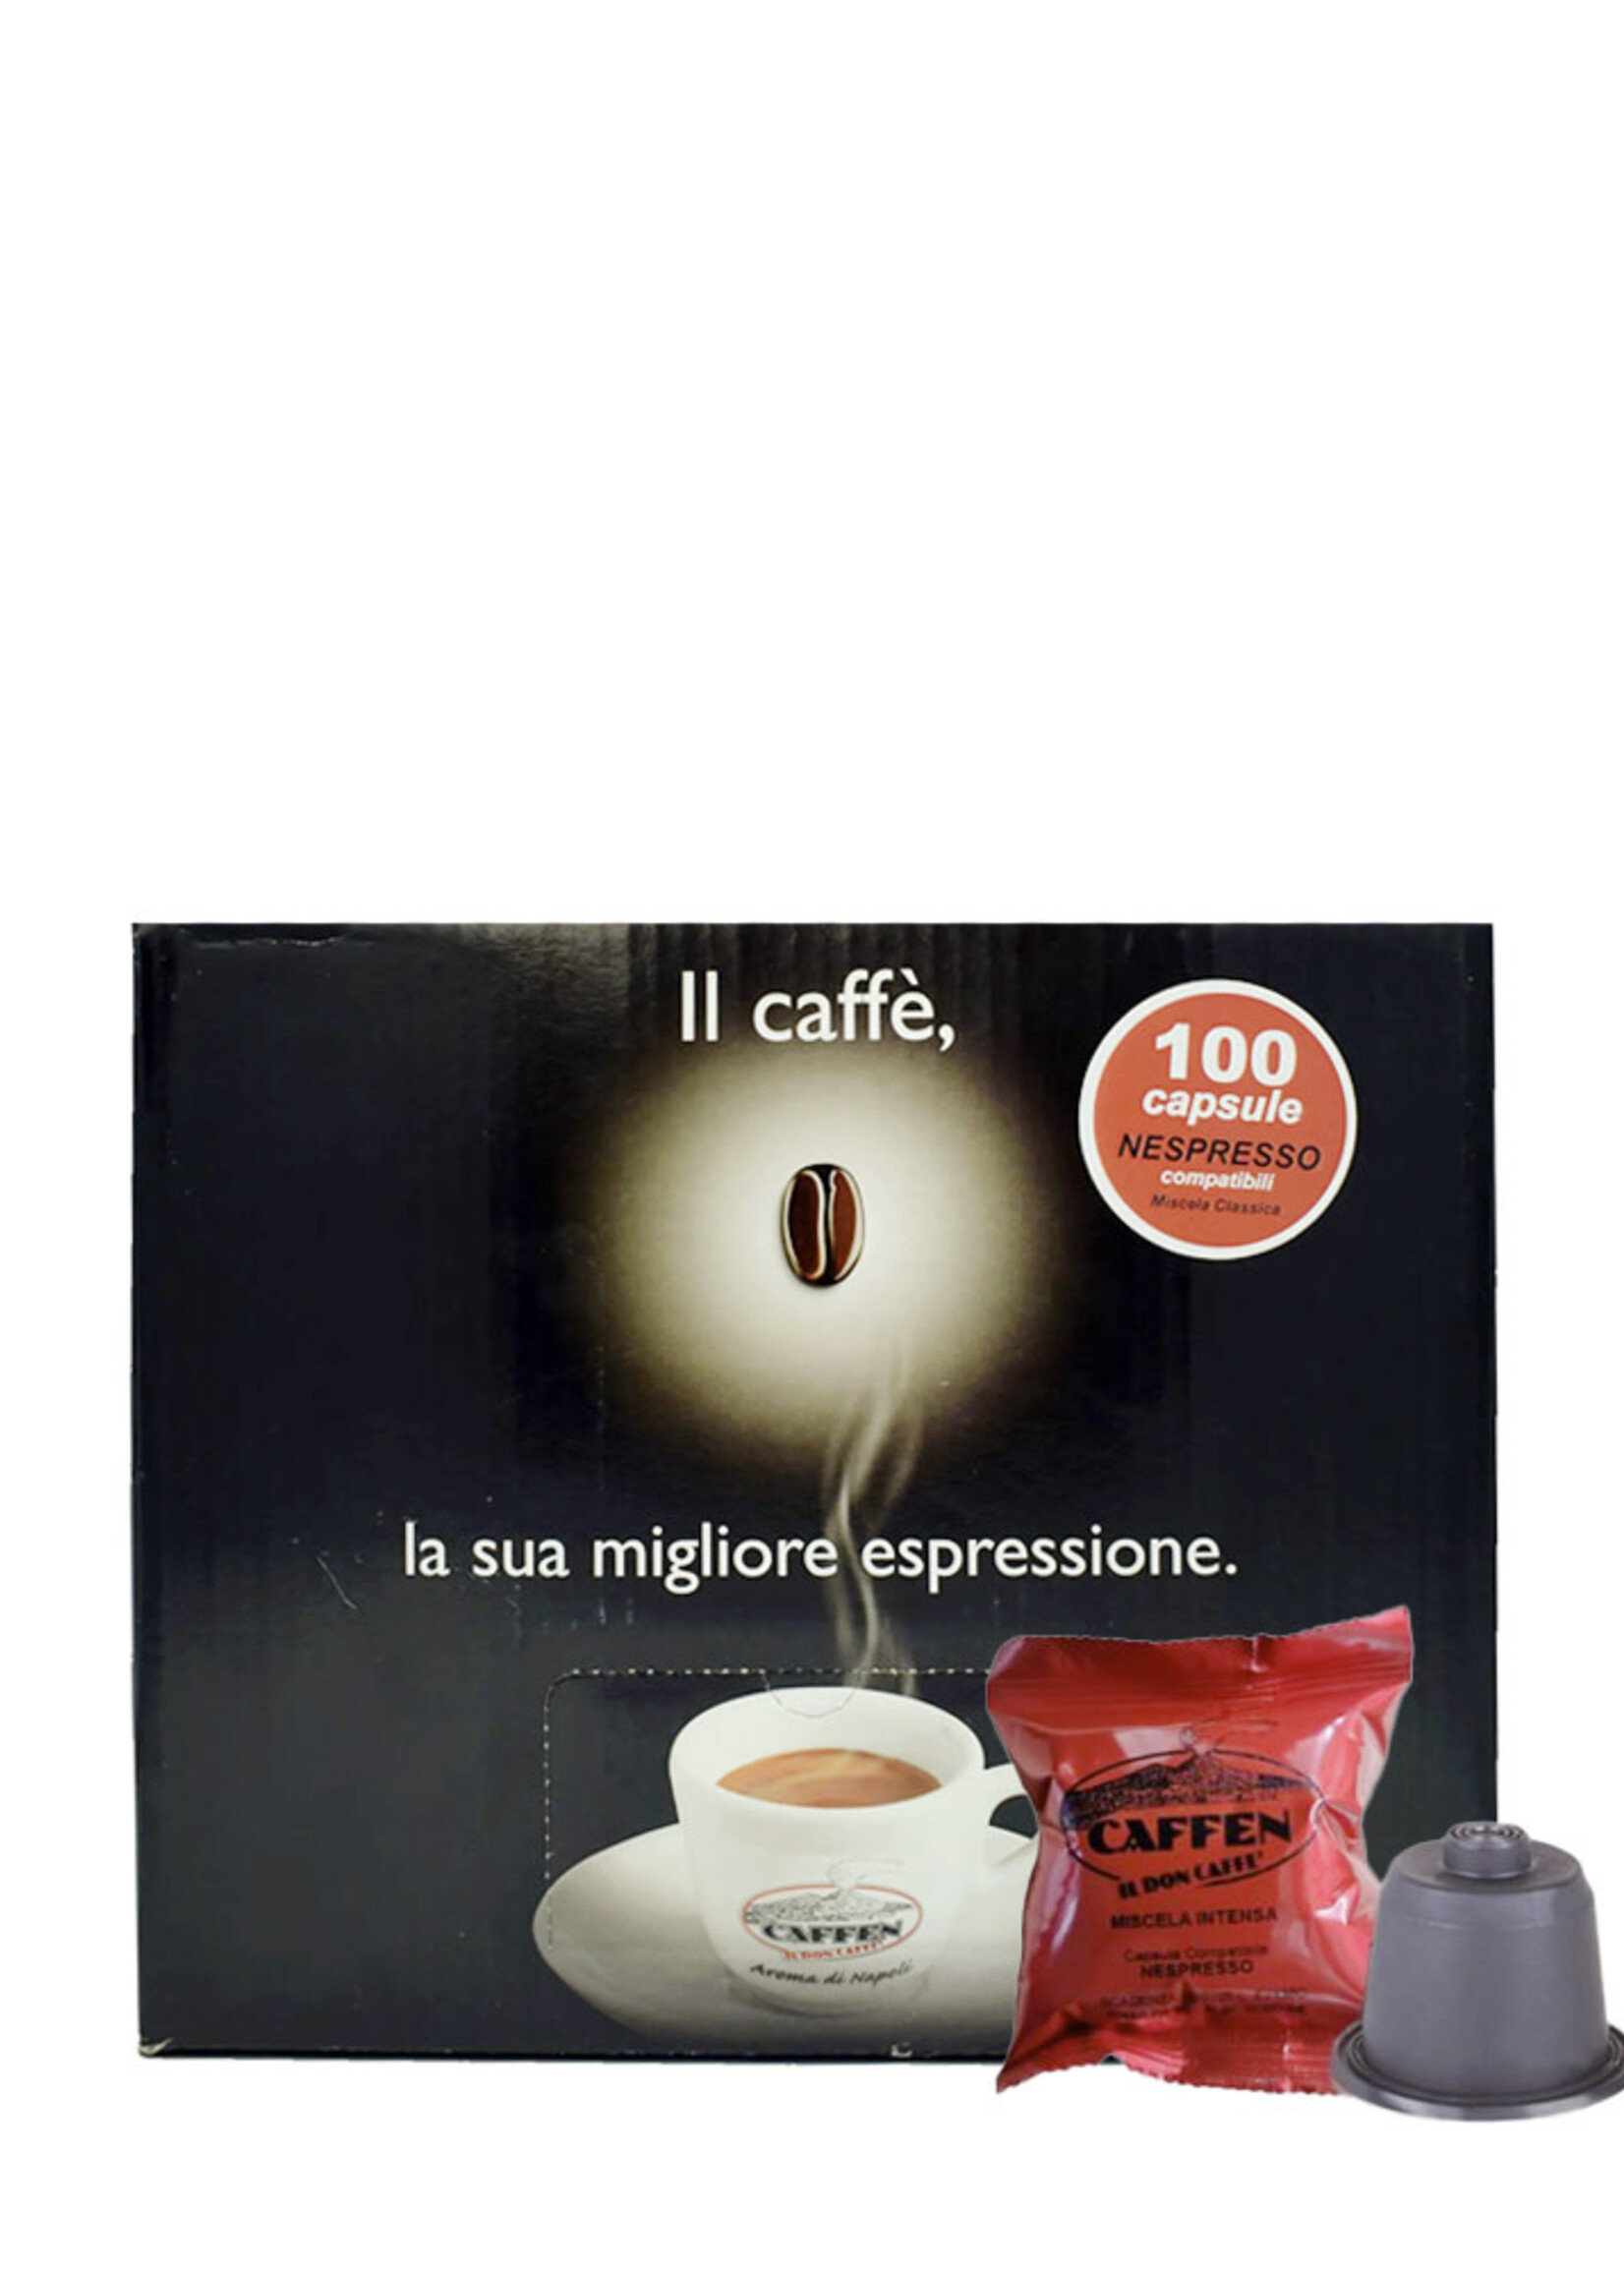 caffen Capsule Nespresso 100 pezzi - Miscela Intensa - 50% Arabica Brasile / 50% Robusta India - Caffen